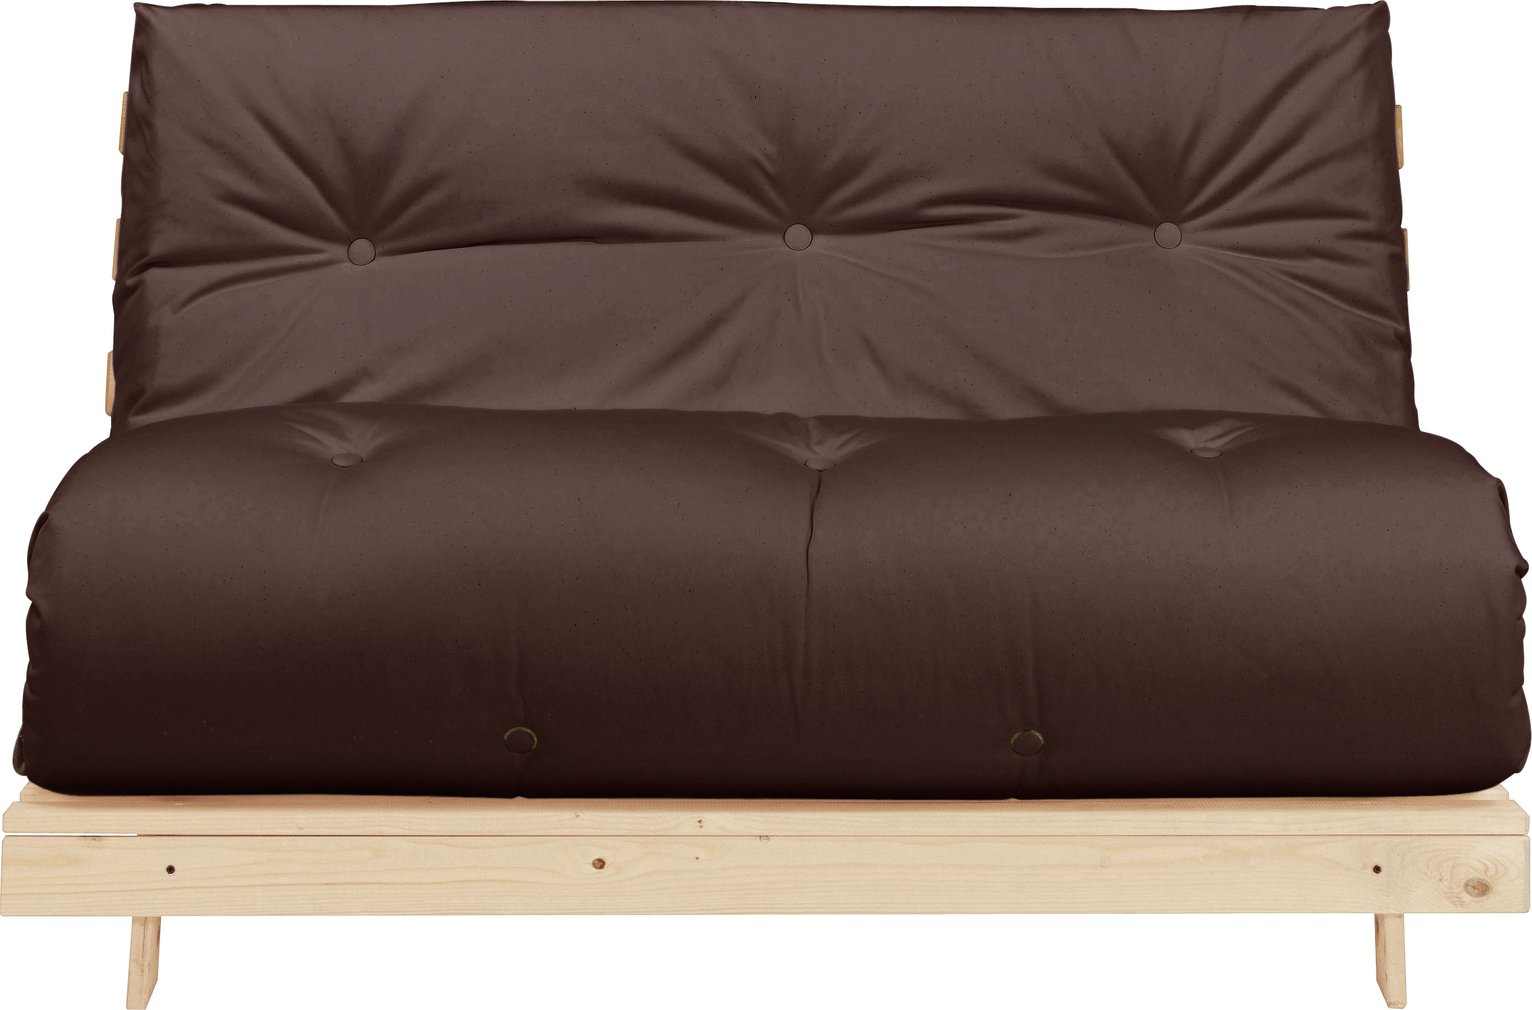 Argos Home Tosa 2 Seater Futon Sofa Bed - Chocolate